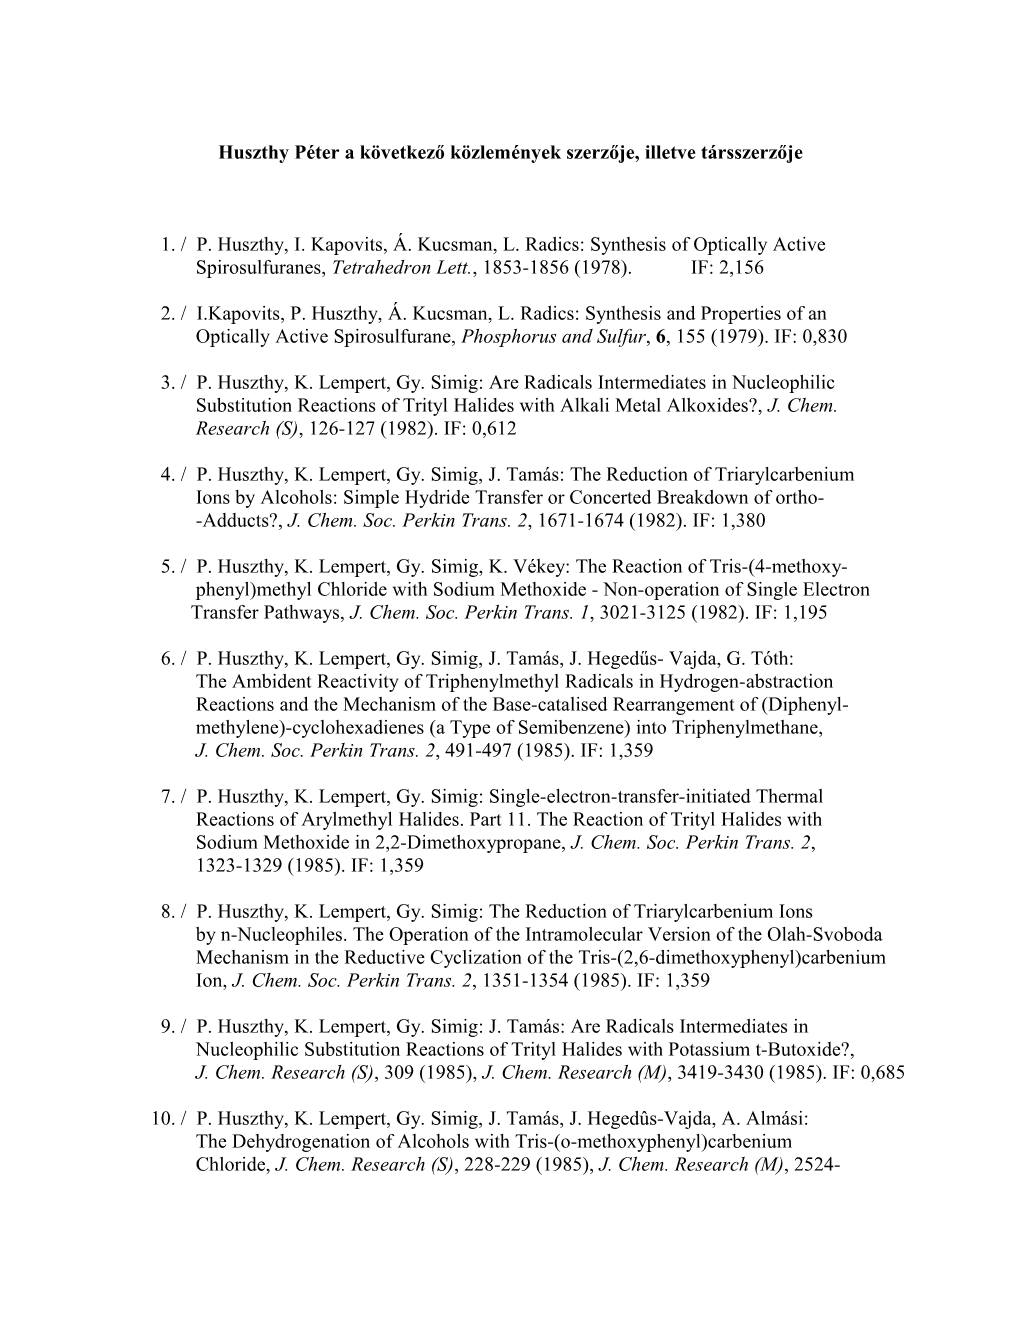 List of Publication